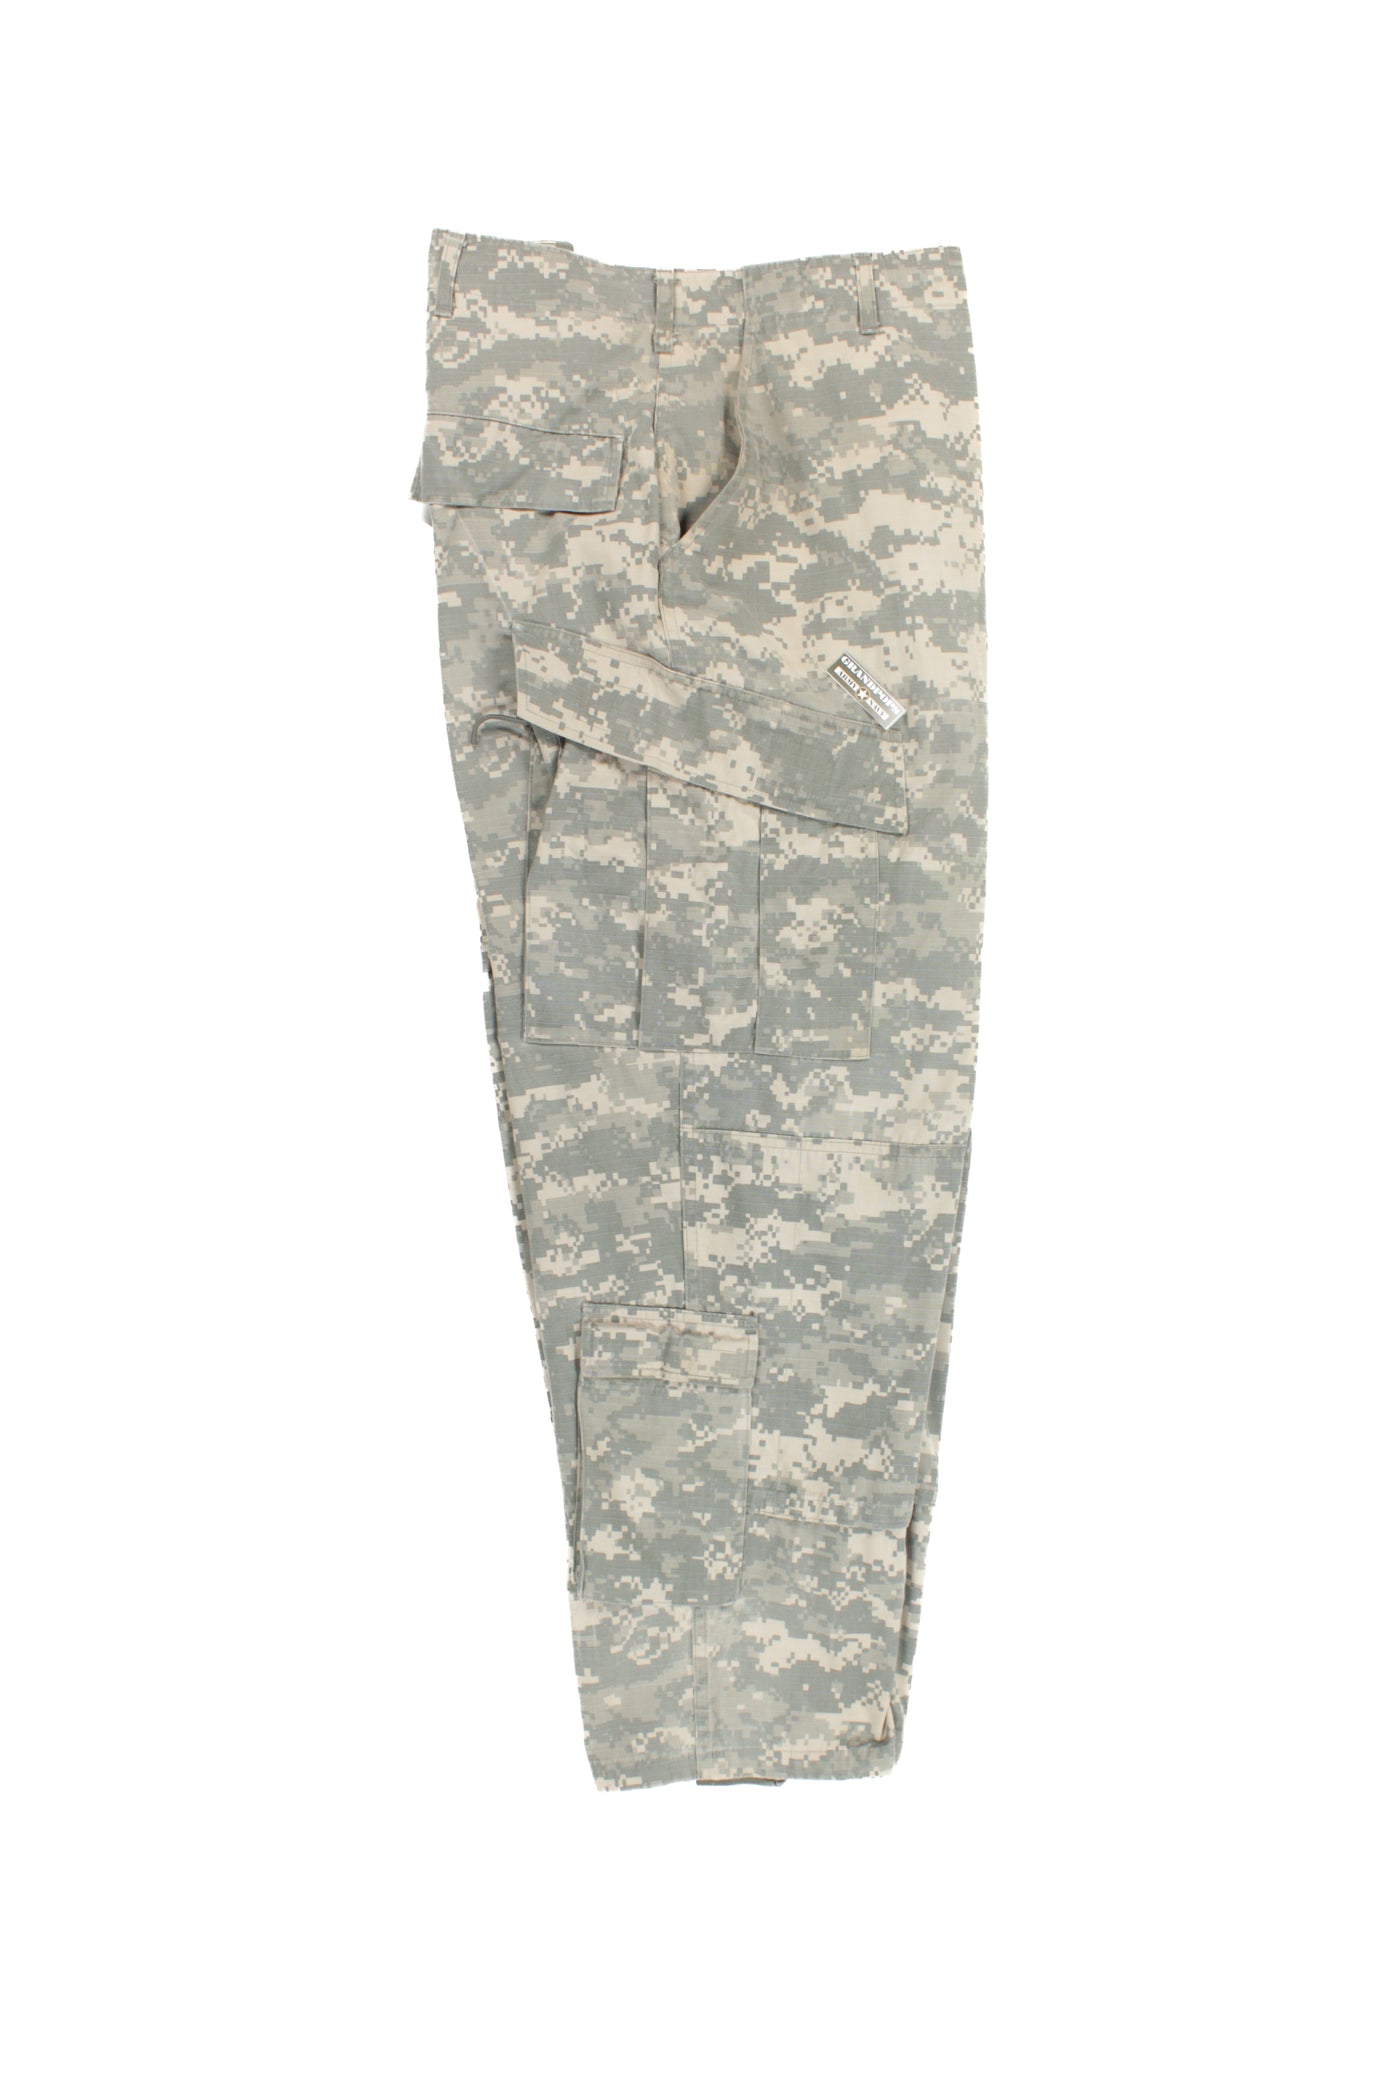 U.S. Army ACU Digital Pants 50% Nylon / 50% Cotton Rip-Stop used M / Short / Fair